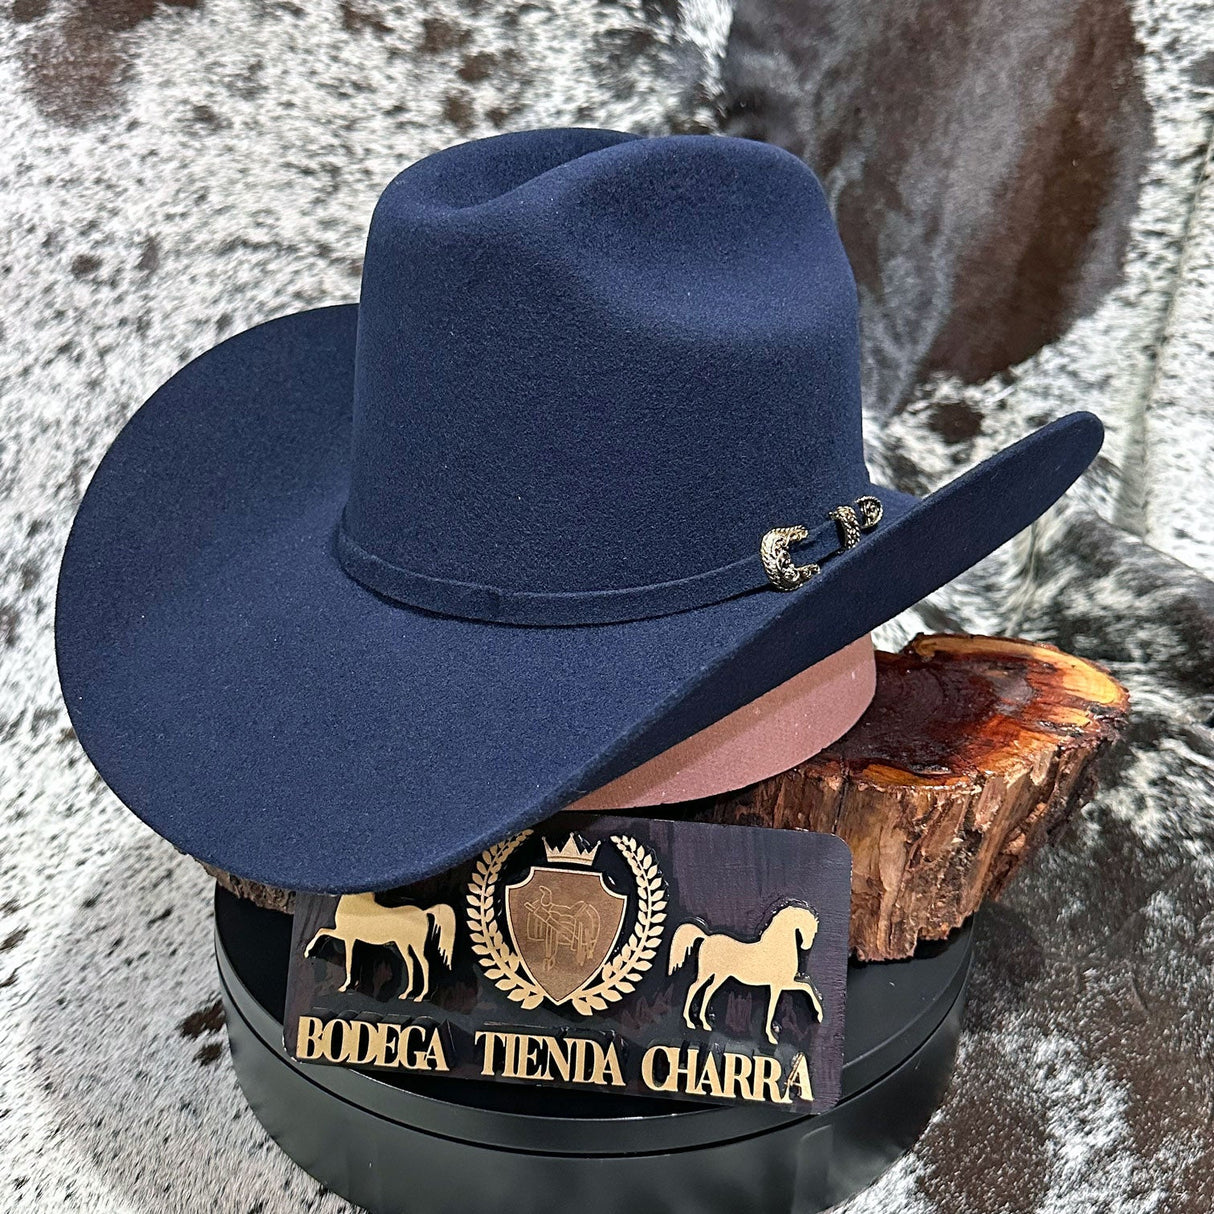 Texana modelo El Patrón - Azul Marino (Tombstone) - Tiendacharra.com - Bodega Tienda Charra